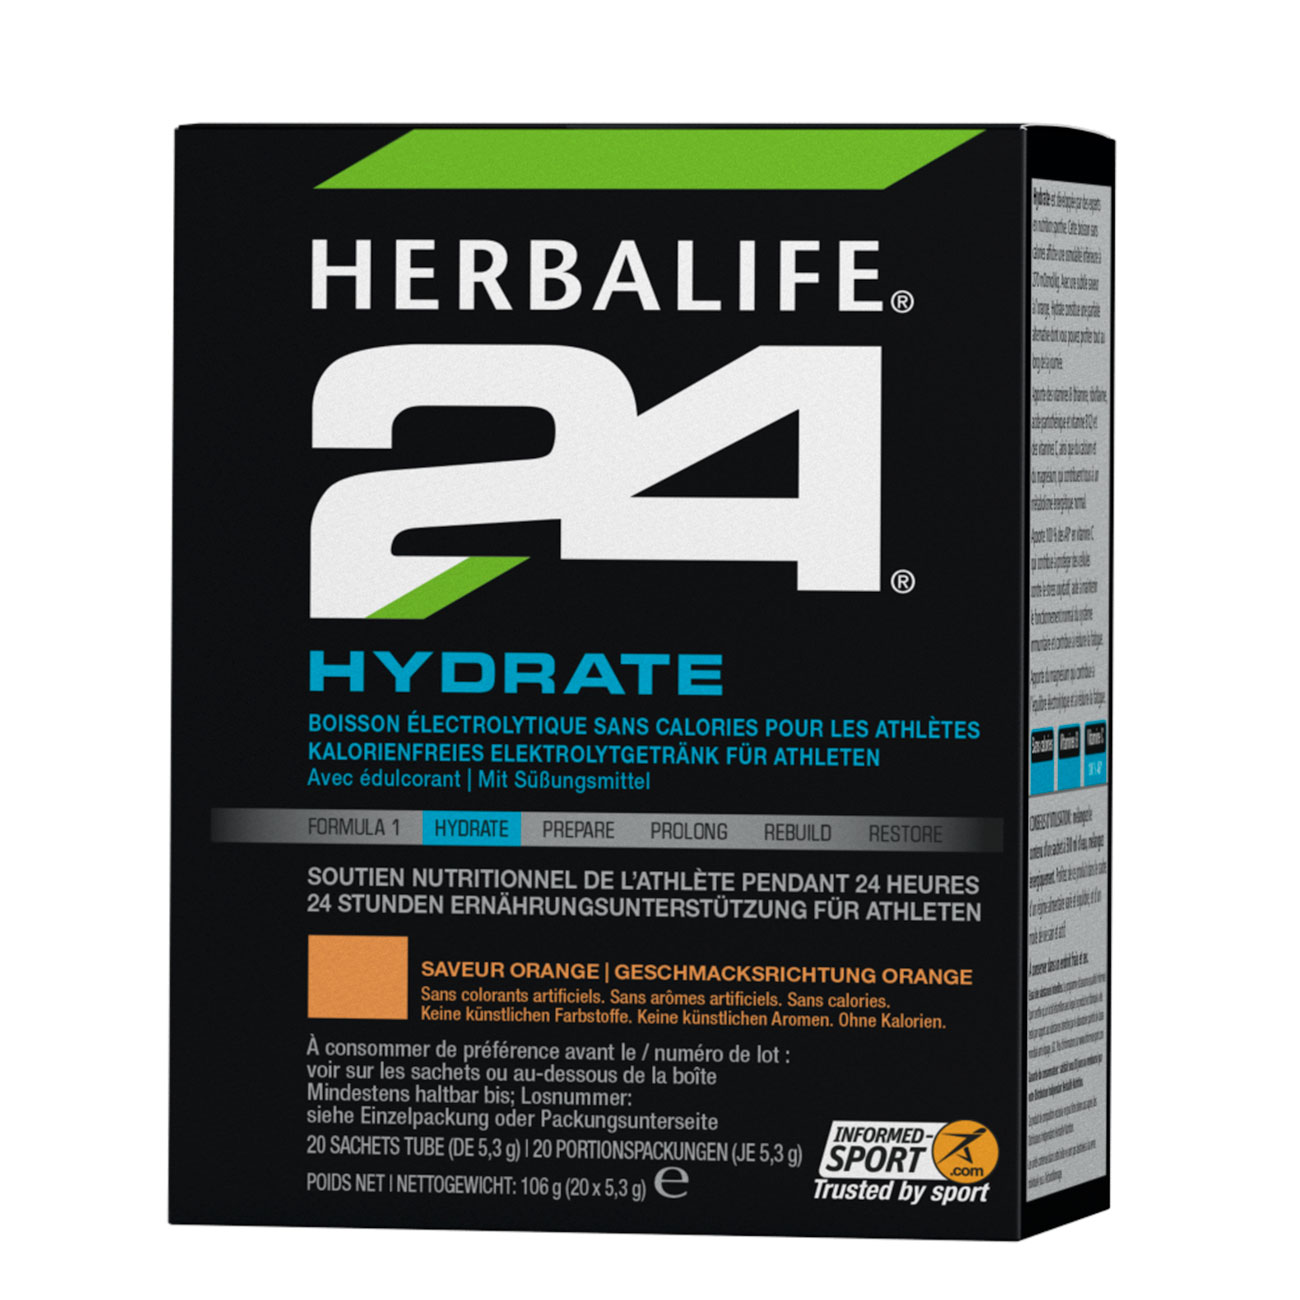 Herbalife24® Hydrate Boissons à base d'électrolytes Orange 20 sachets, 106g